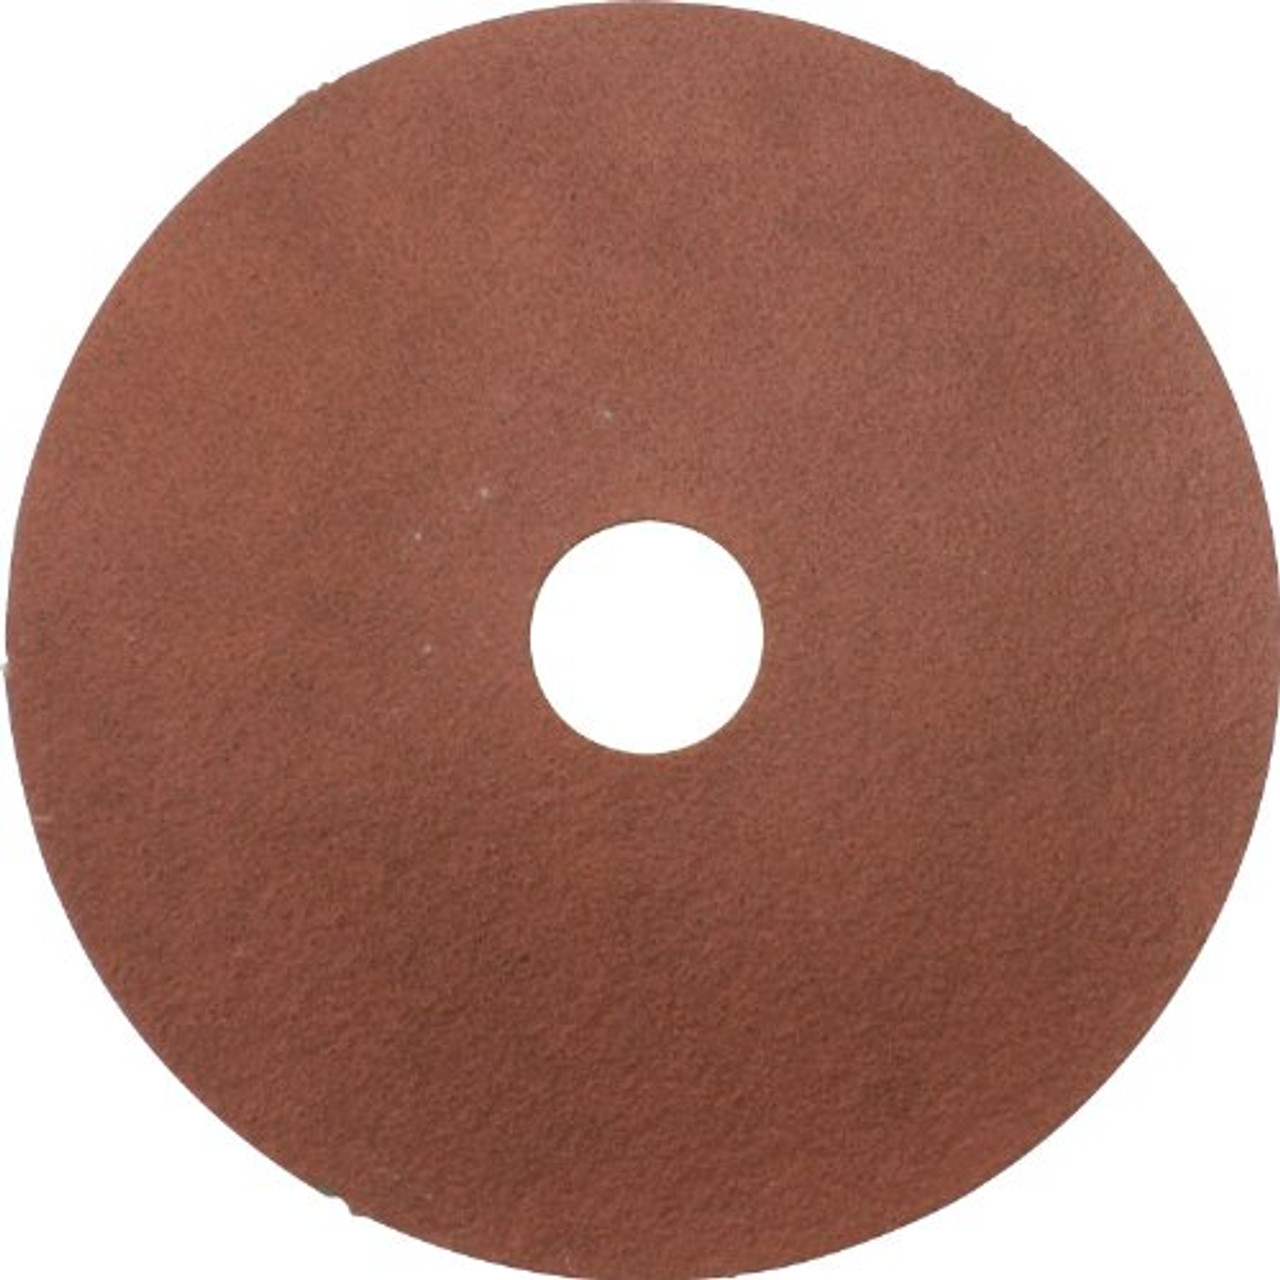 Makita (742076-A-5) #120 Resin Fiber Abrasive Disc, 5-Inch, 5-Pack